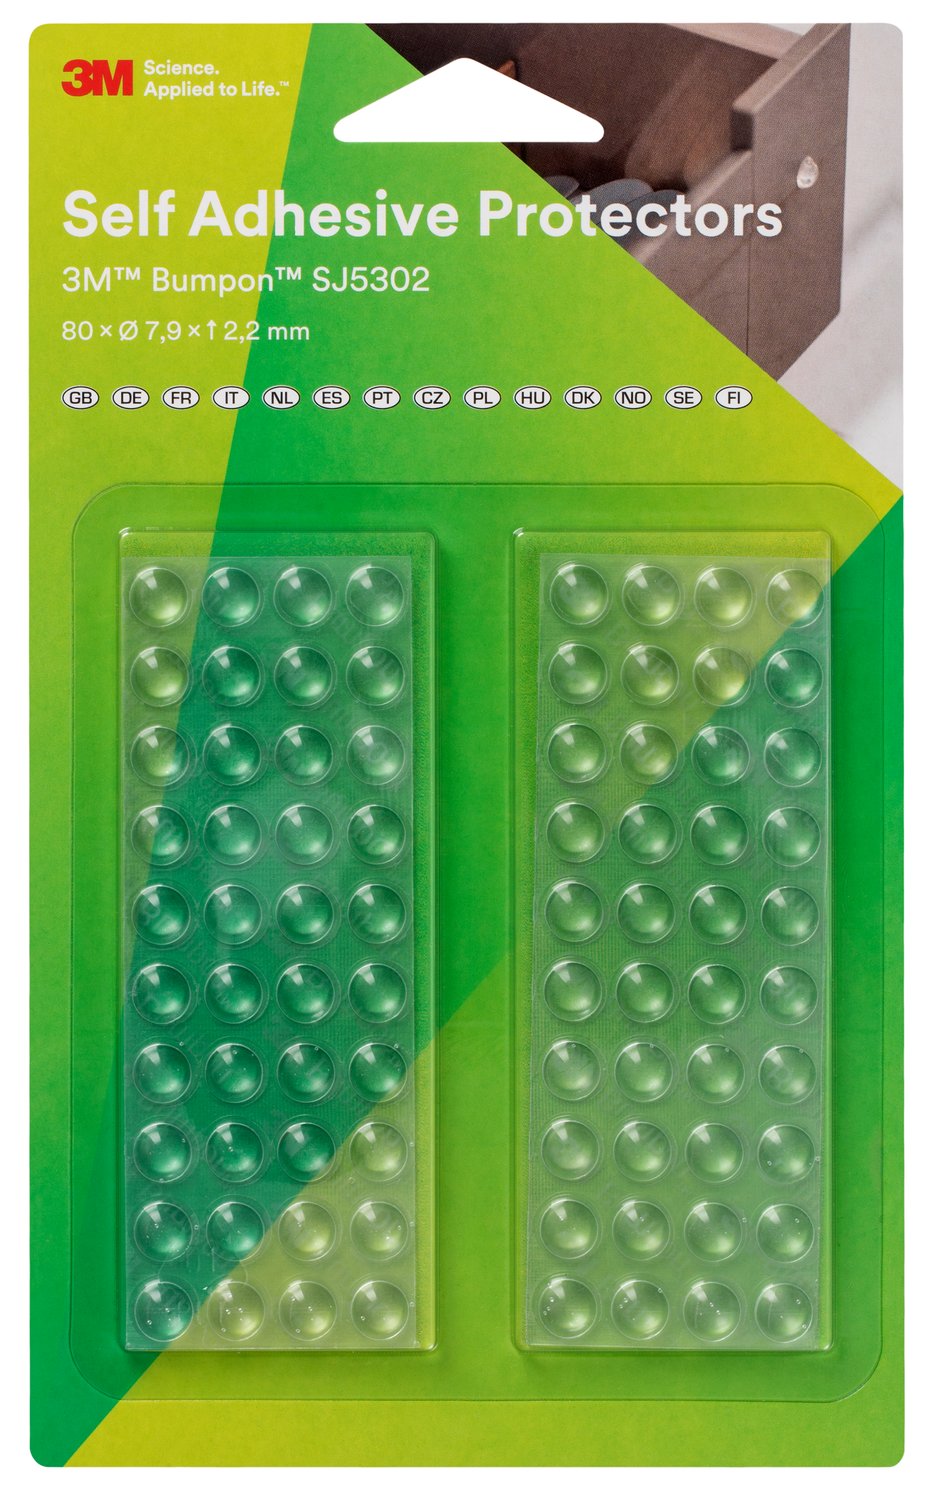 7100145660 - 3M Bumpon SJ5302Bl Elastic Buffer Mini-Pack, Transparent, 80 Pieces,
7.9 x 2.2 mm, 18 Pack/Case